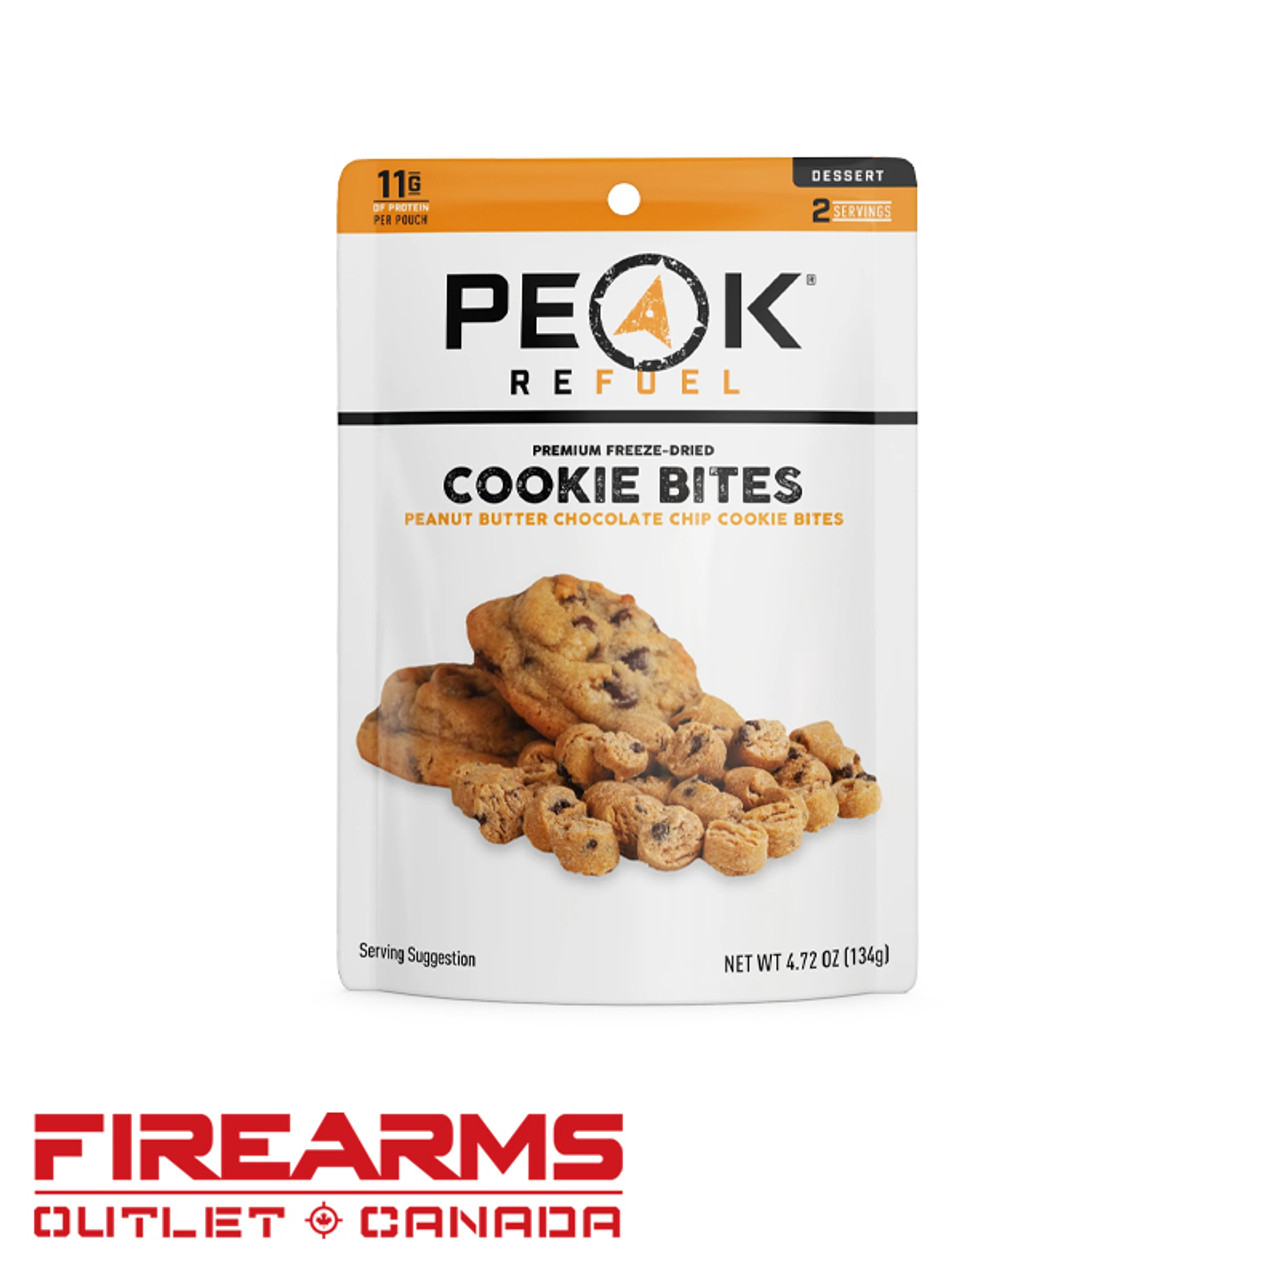 Peak Refuel - Peanut Butter Chocolate Chip Cookie Bites [58365]